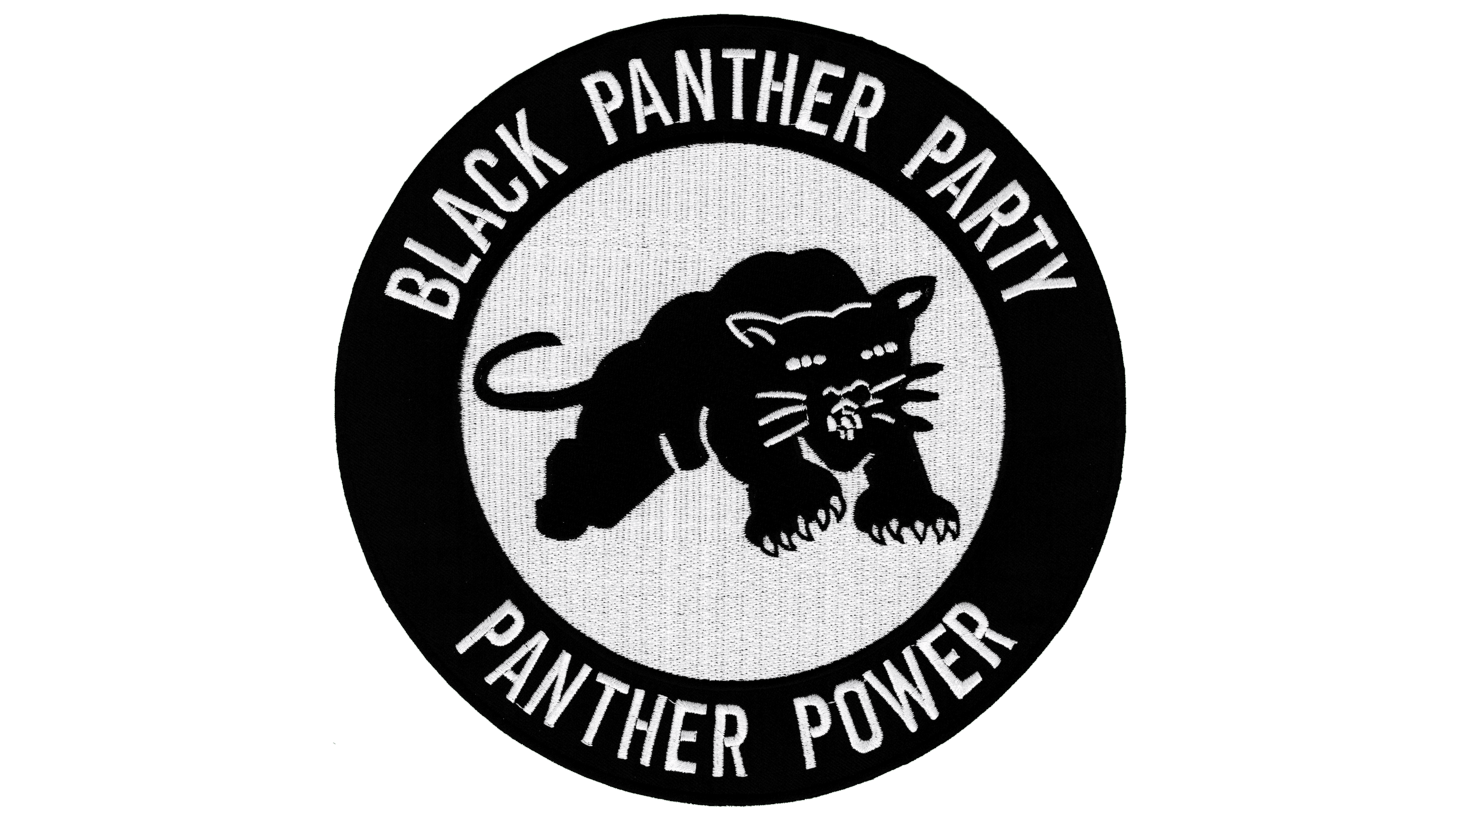 Black panther party symbol